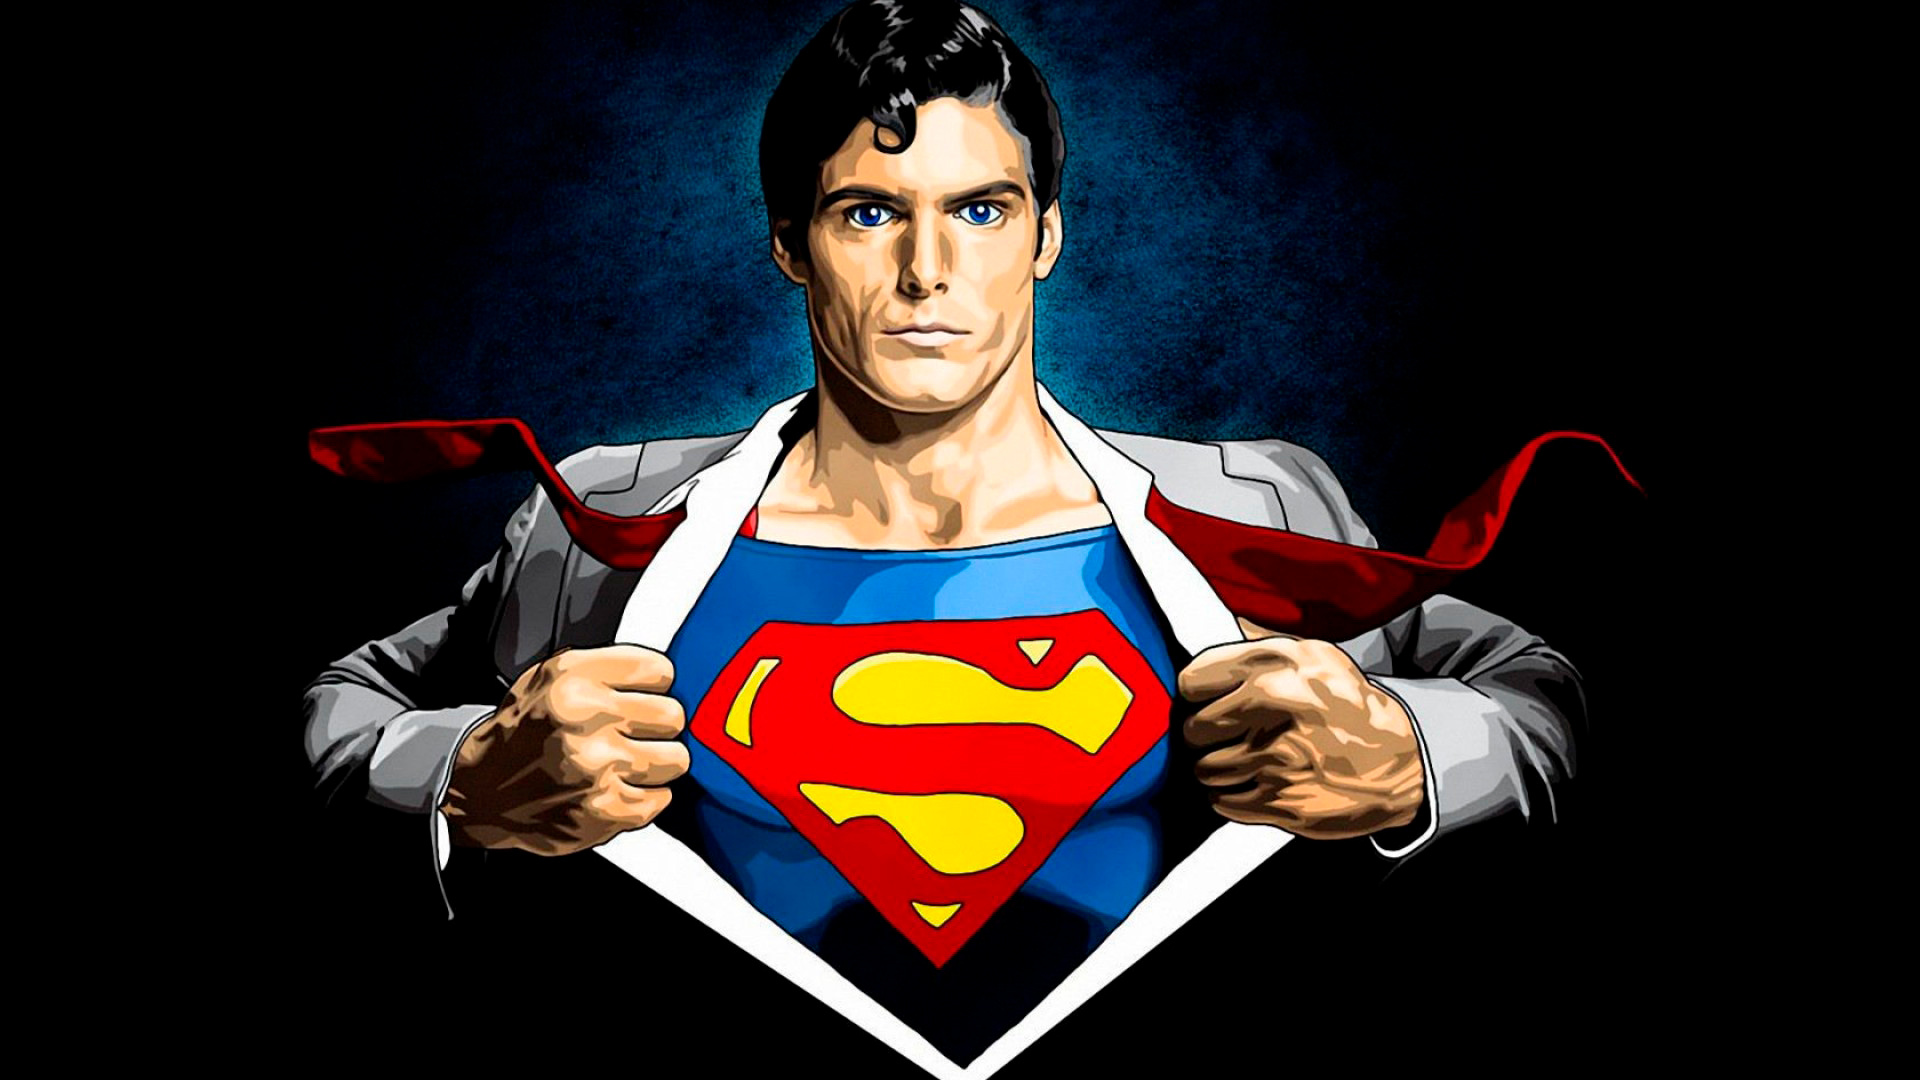 Clark Kent, Superman suit, Iconic imagery, Courageous defender, 1920x1080 Full HD Desktop